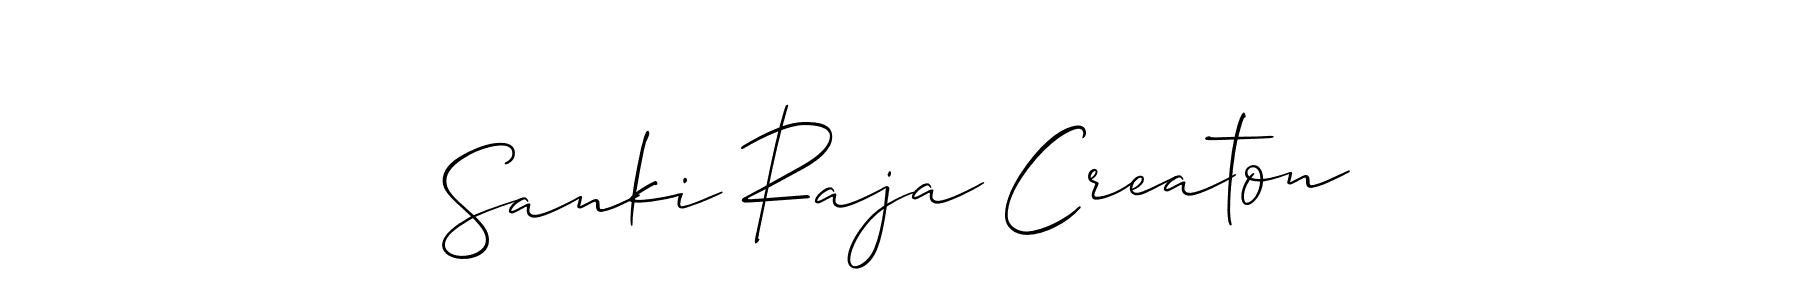 How to make Sanki Raja Creaton signature? Allison_Script is a professional autograph style. Create handwritten signature for Sanki Raja Creaton name. Sanki Raja Creaton signature style 2 images and pictures png